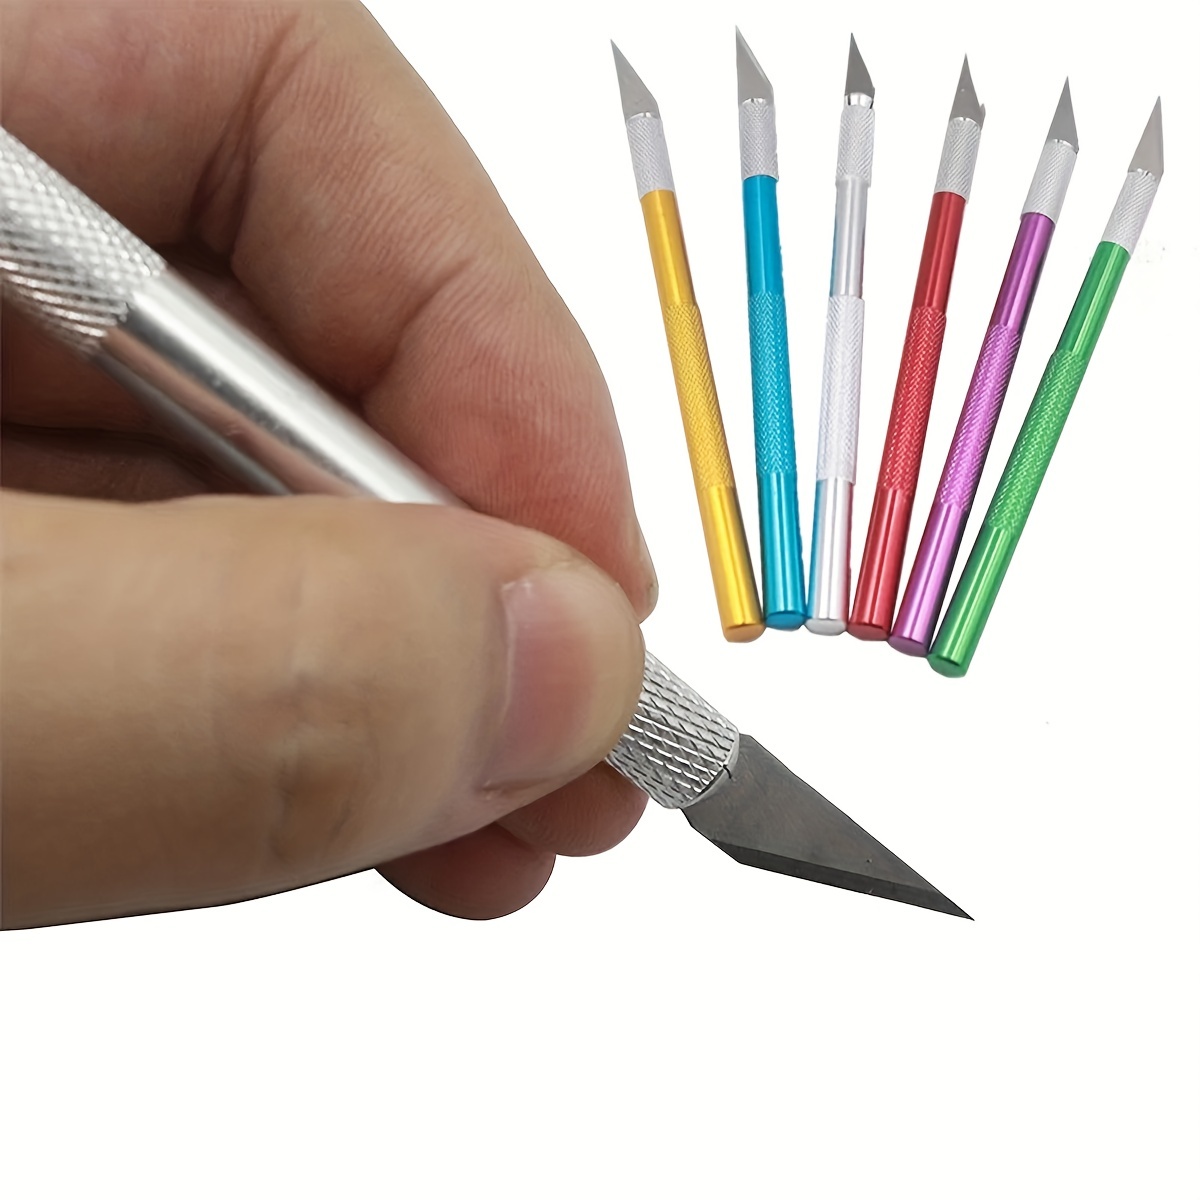 Diamond Painting Handbook Carving Pen Knife Paper Cutter Diamond Painting  Tools